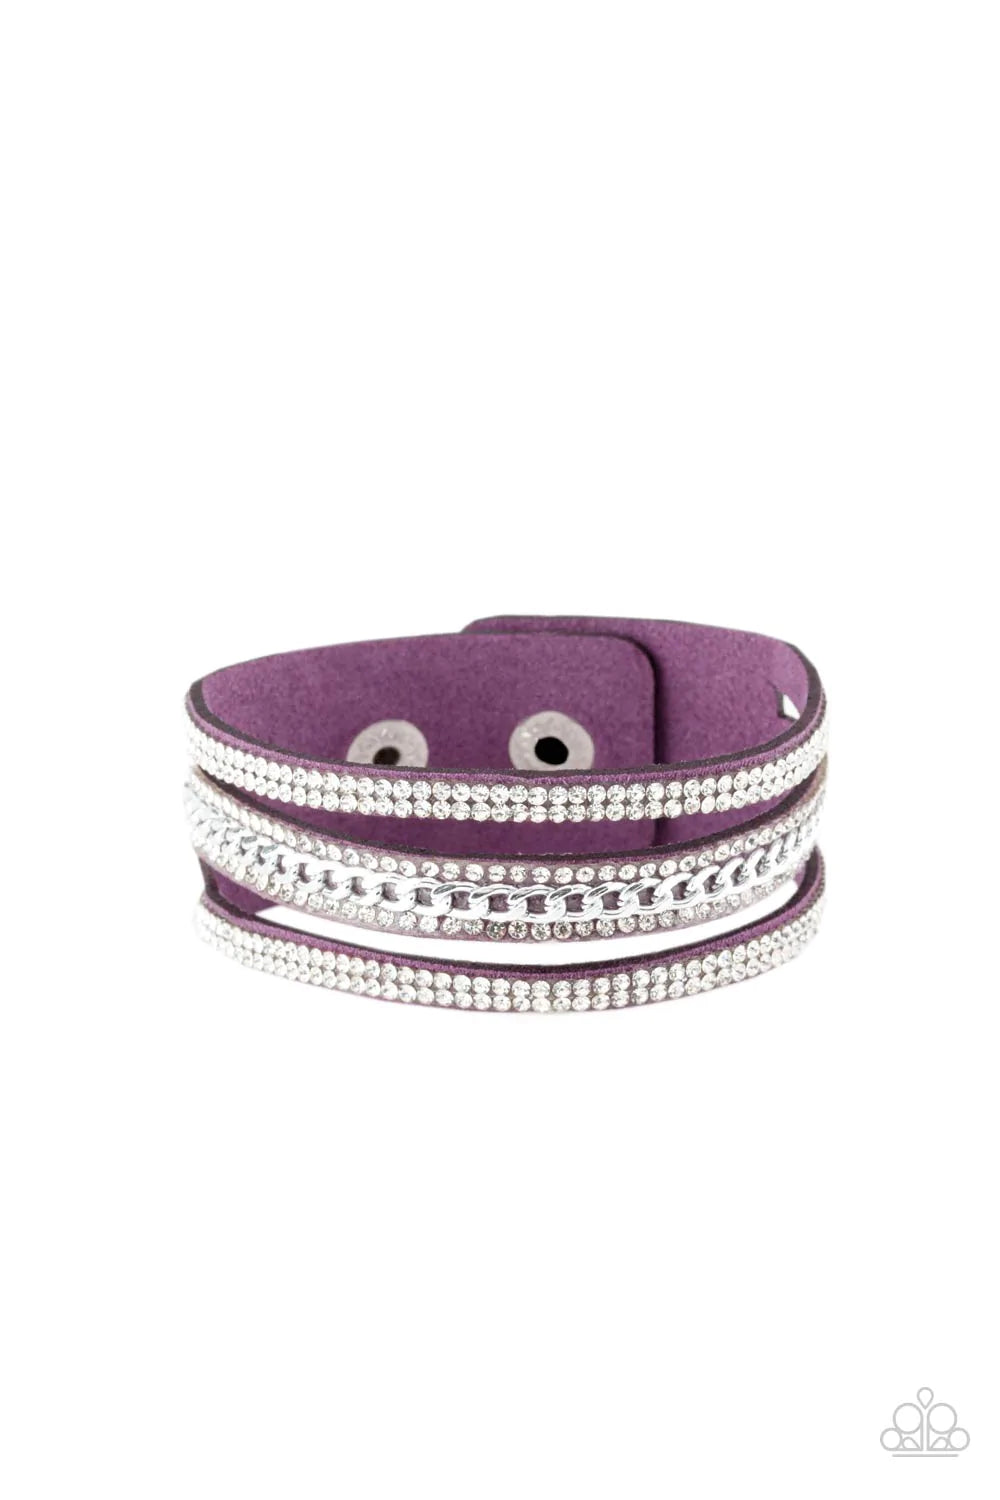 Rollin In Rhinestones - Purple Bracelet - Princess Glam Shop